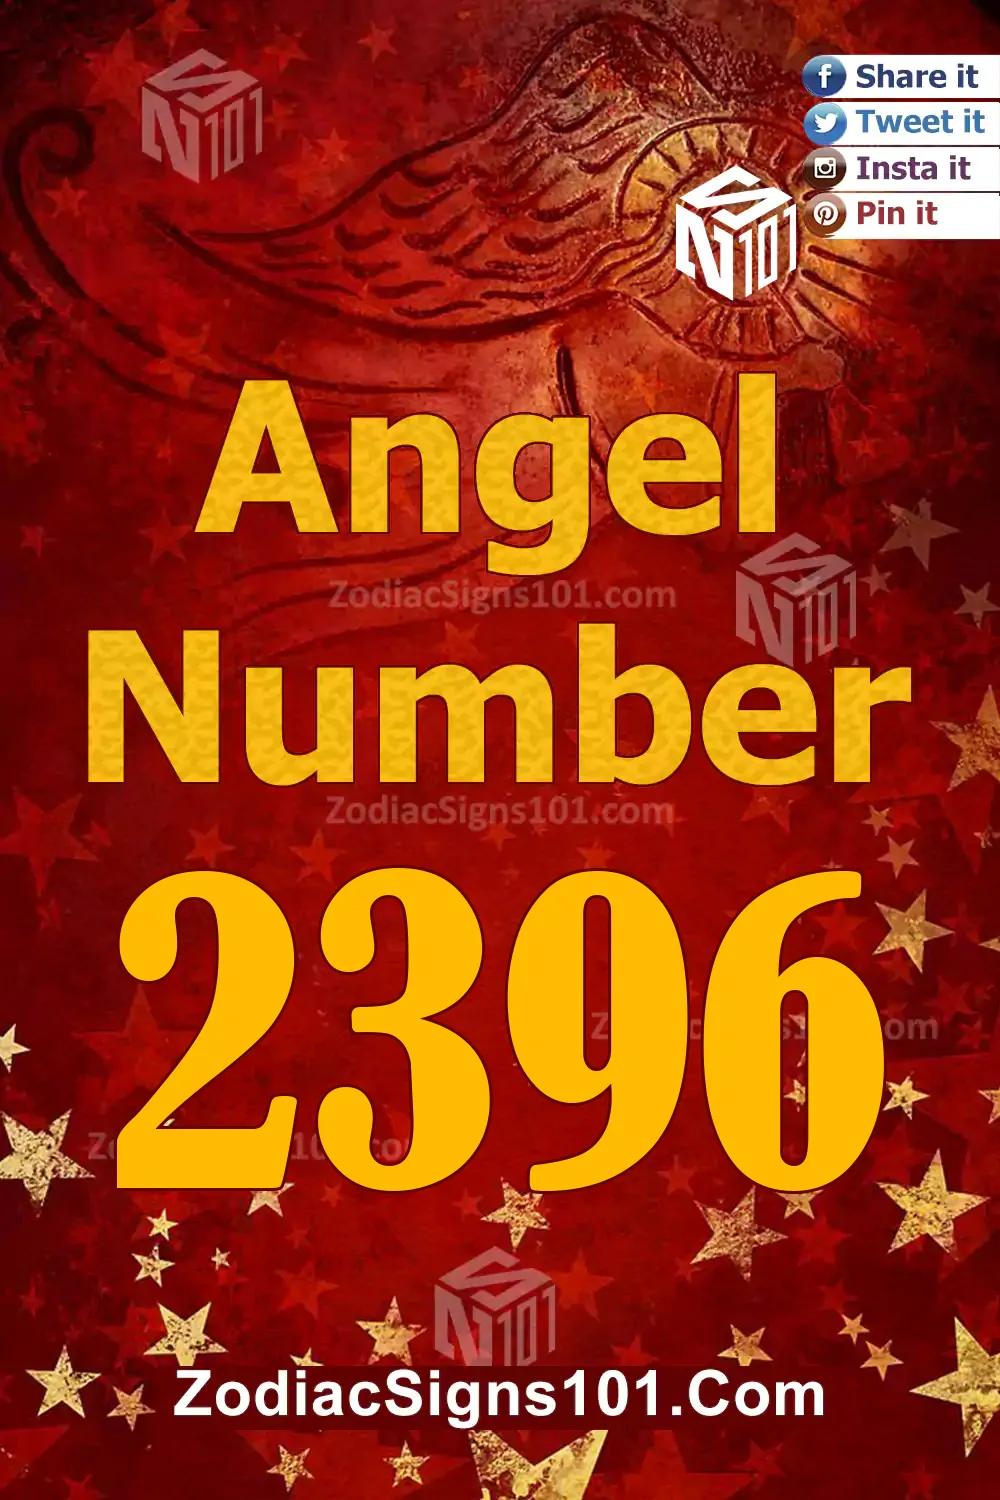 2396-Angel-Number-Meaning.jpg